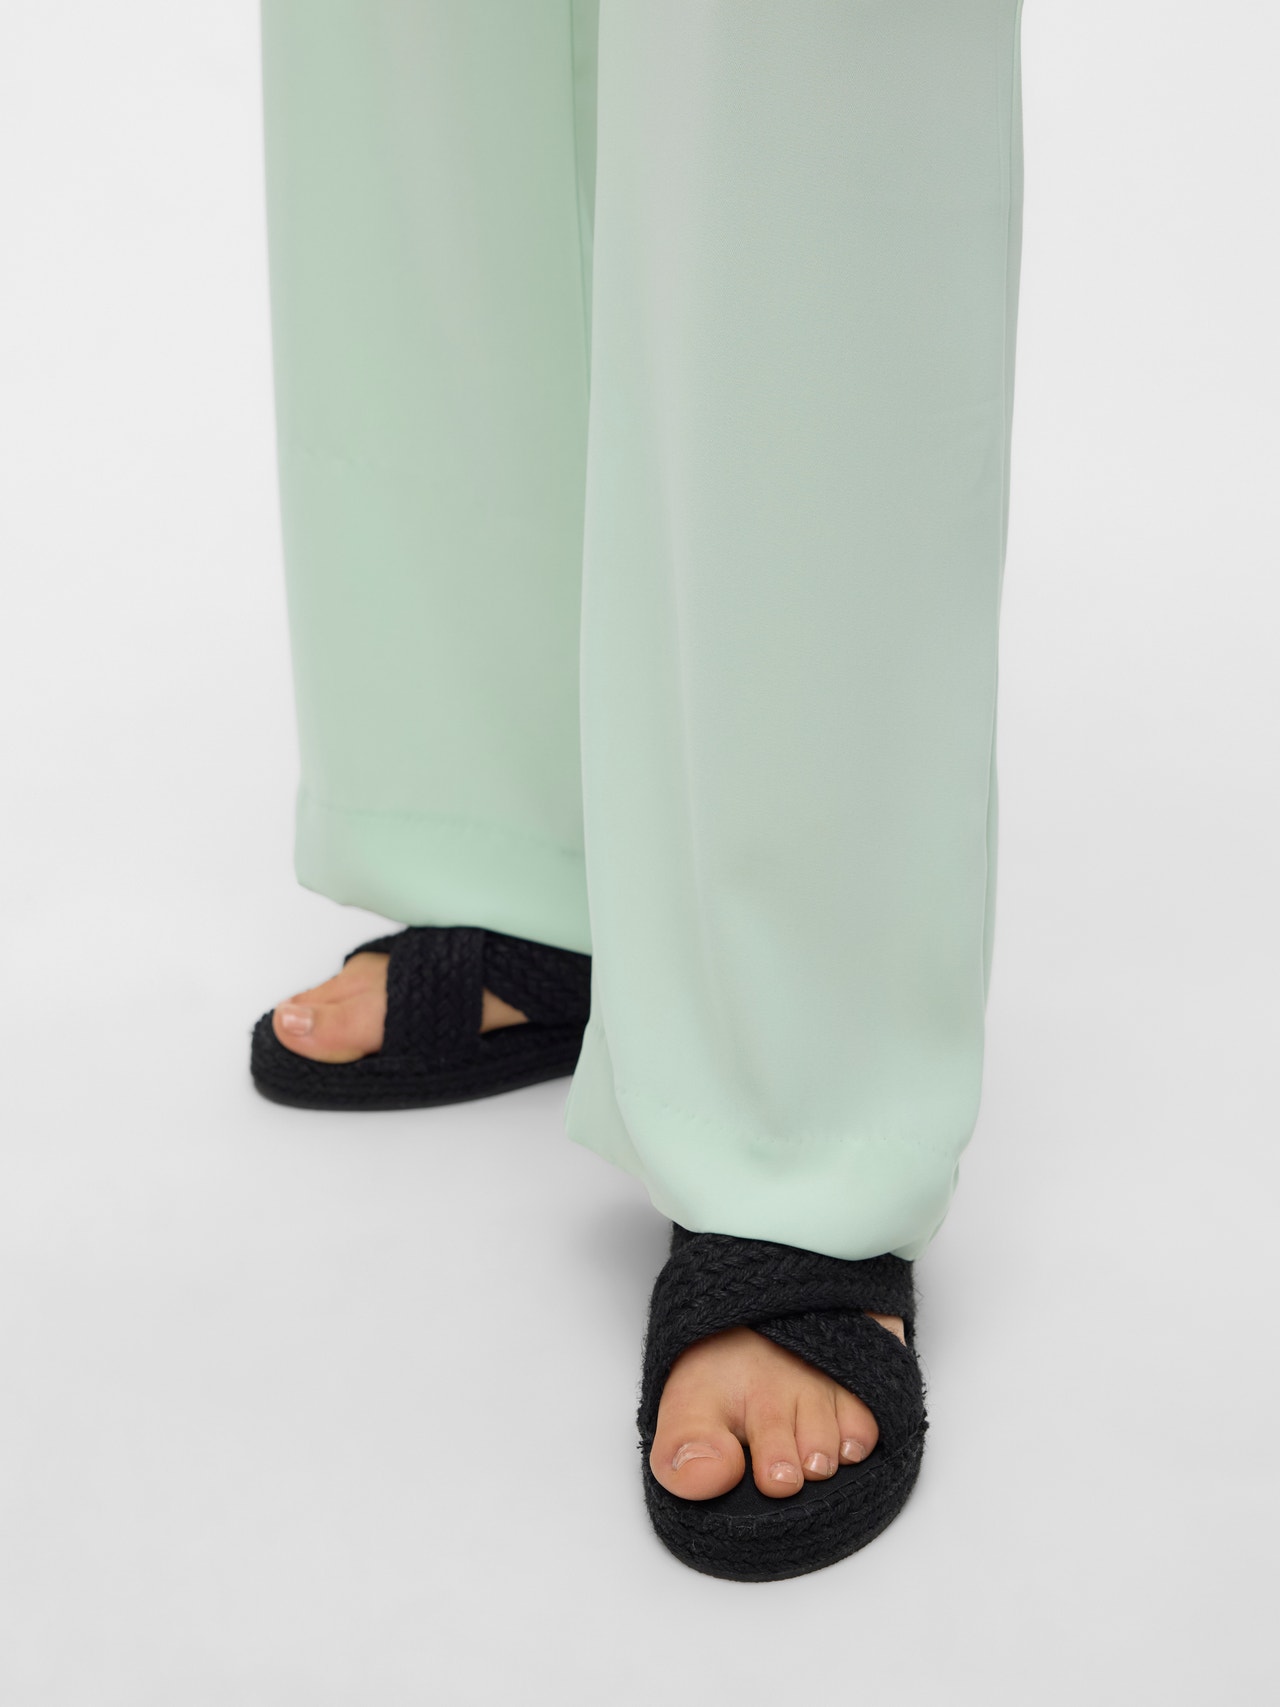 Vero Moda VMGISELLE Pantalons -Celadon - 10295598